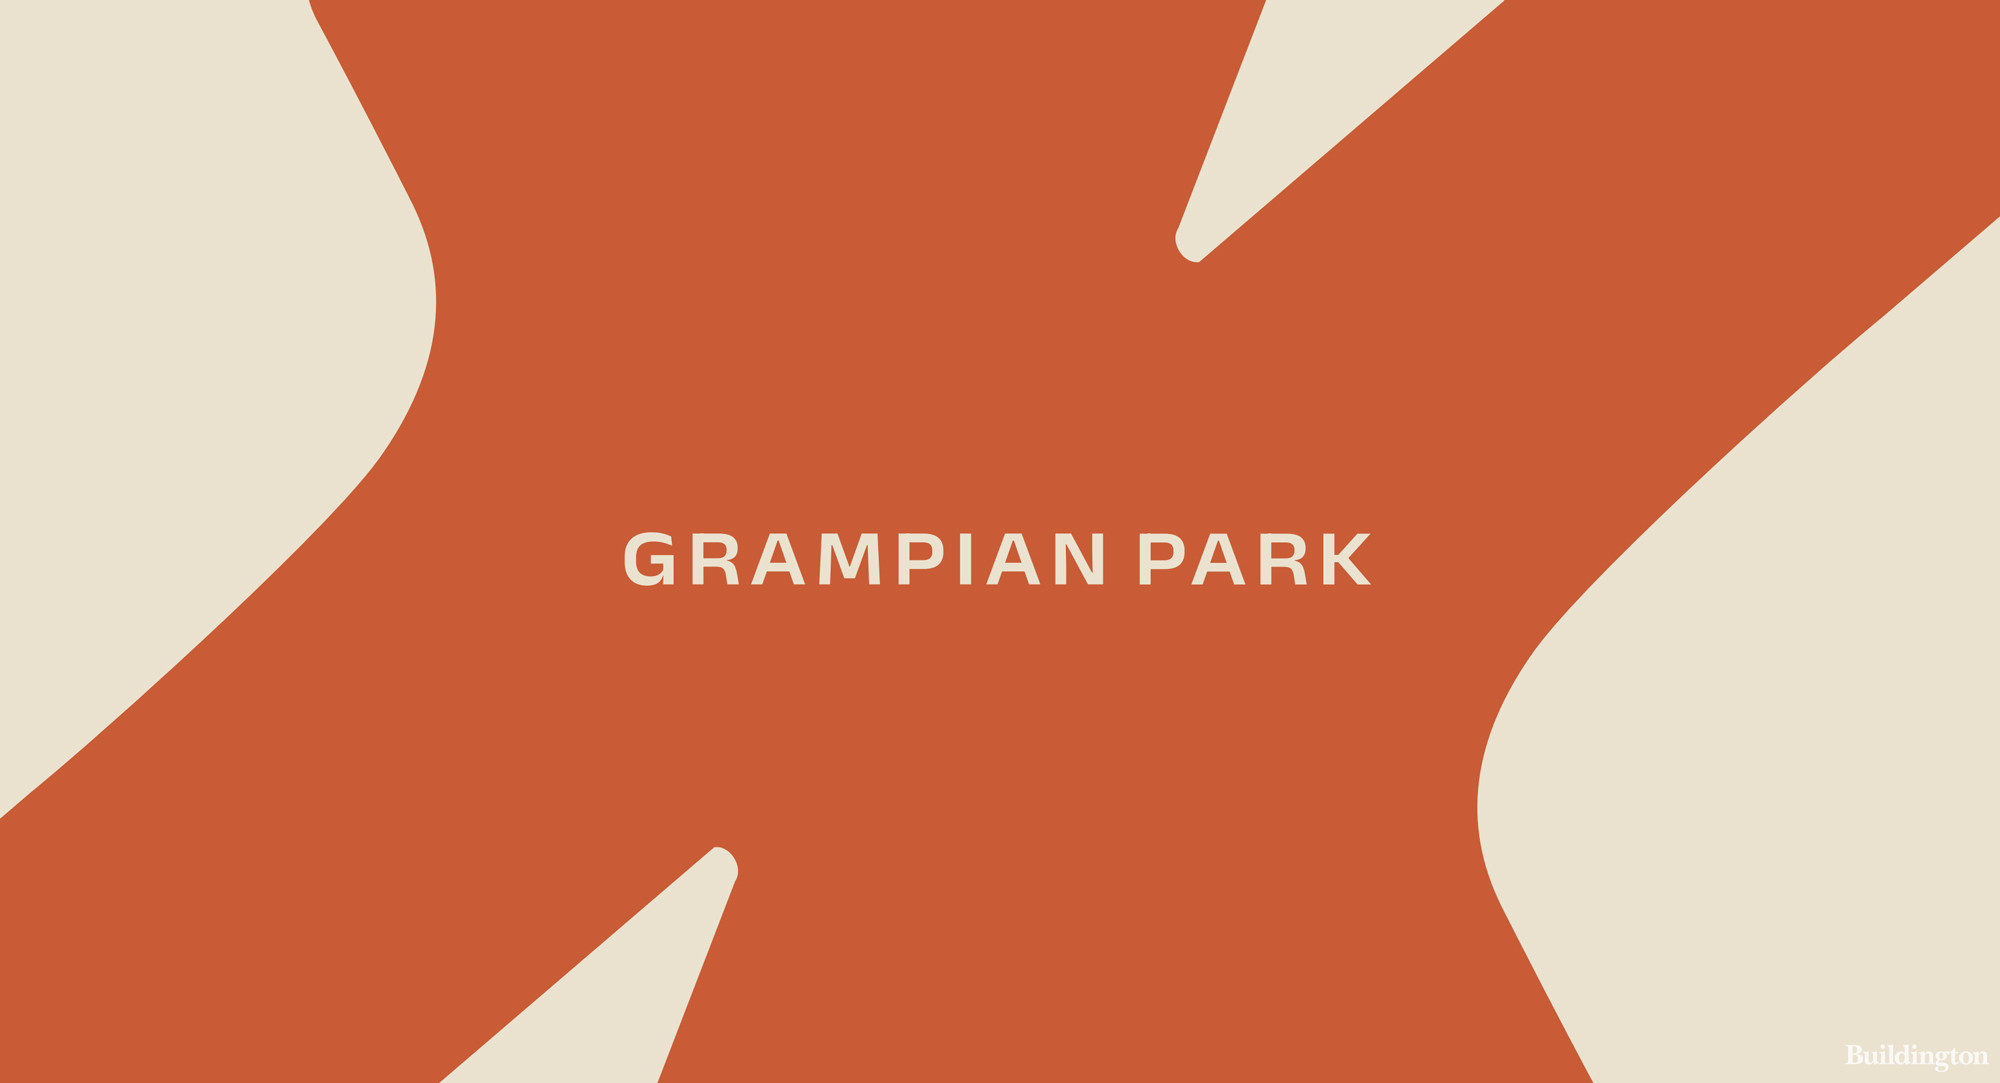 Grampian Park development logo cover.